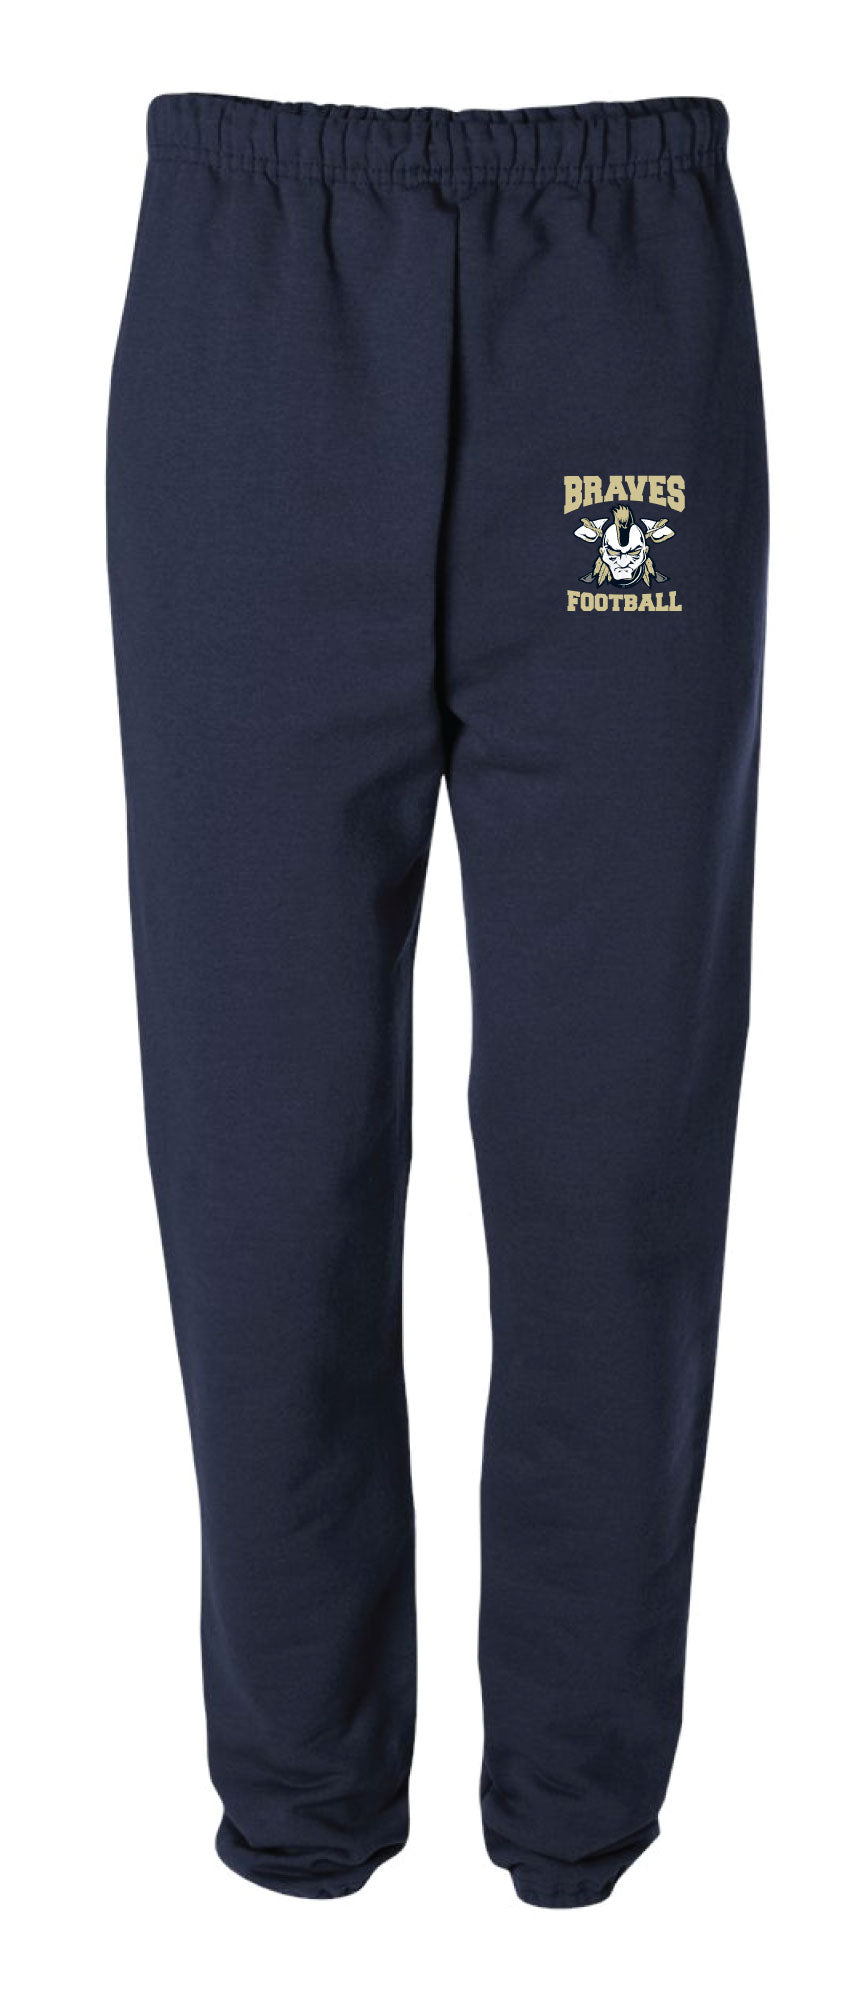 Braves Football Cotton Sweatpants - Navy Style 1 - 5KounT2018